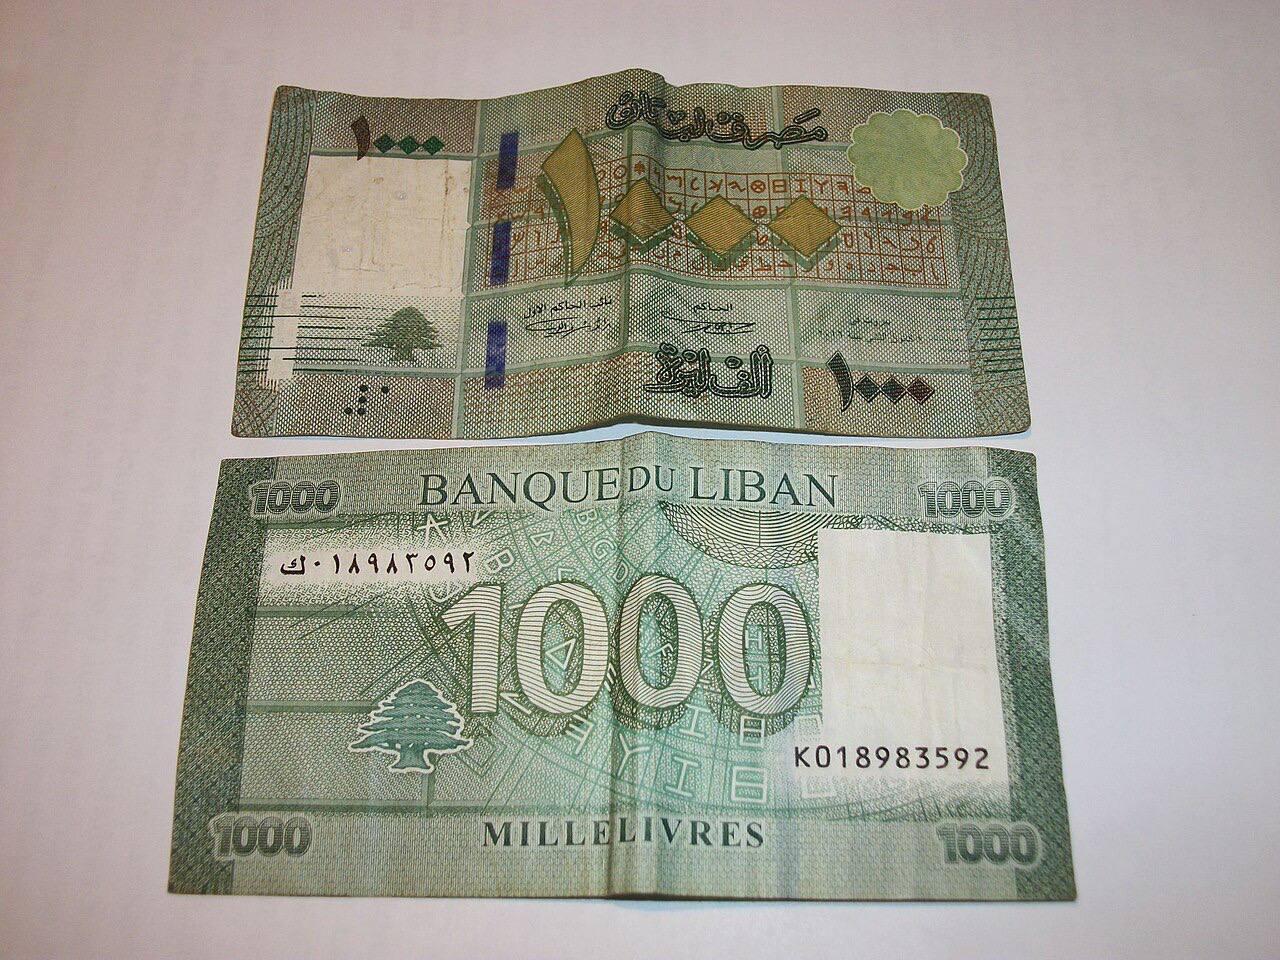 Money in Lebanon